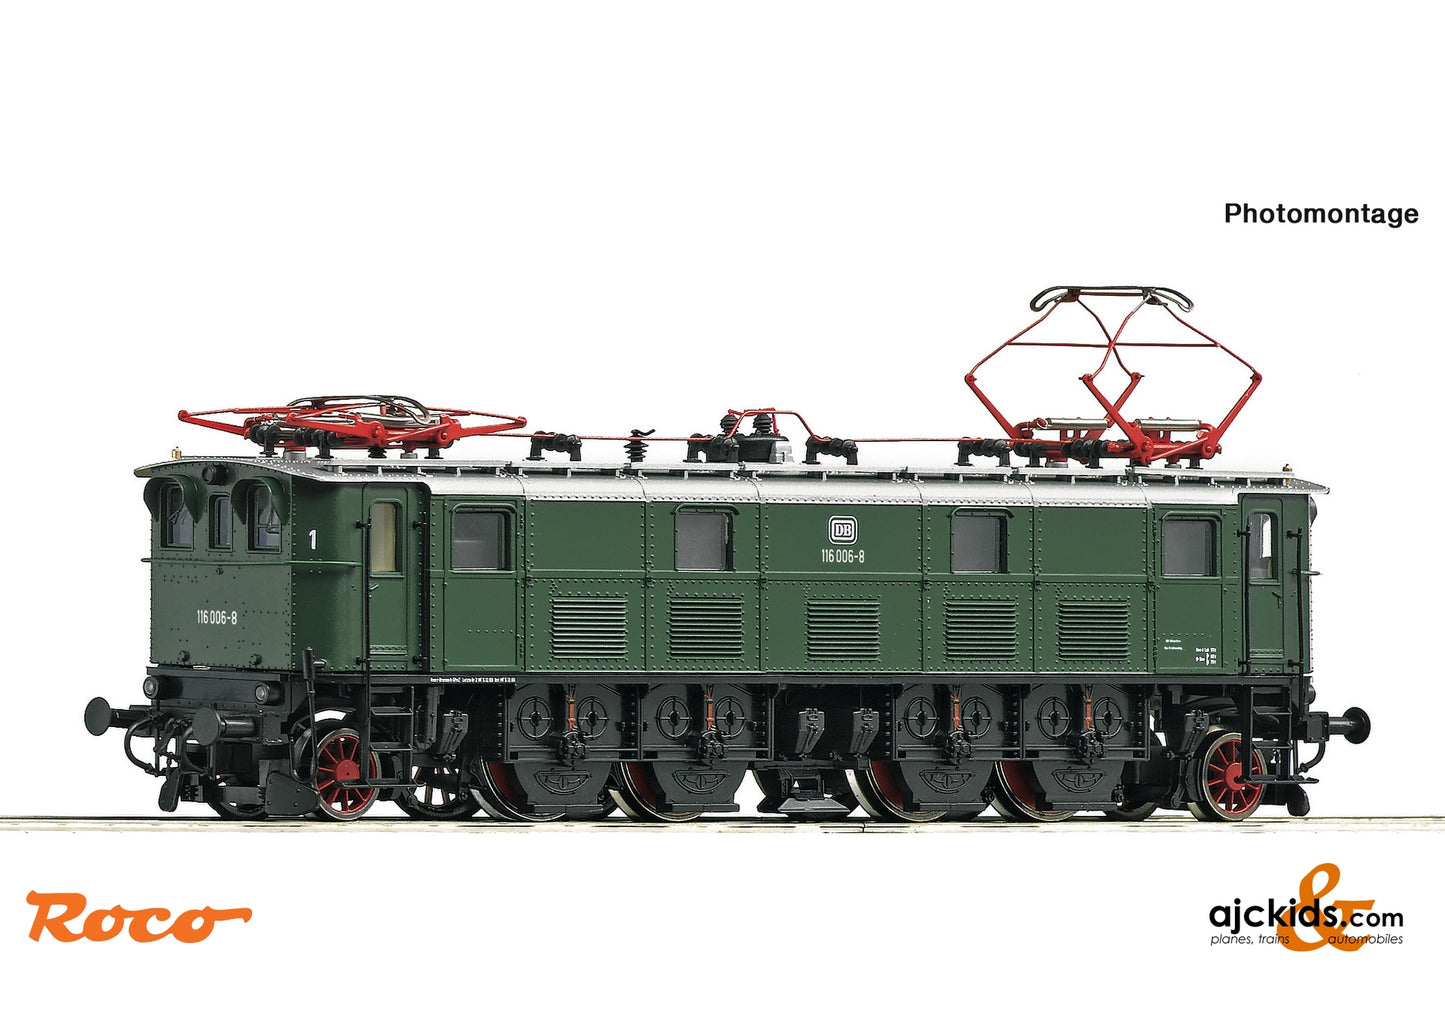 Roco 78463 - Electric locomotive BR 116, DB at Ajckids.com